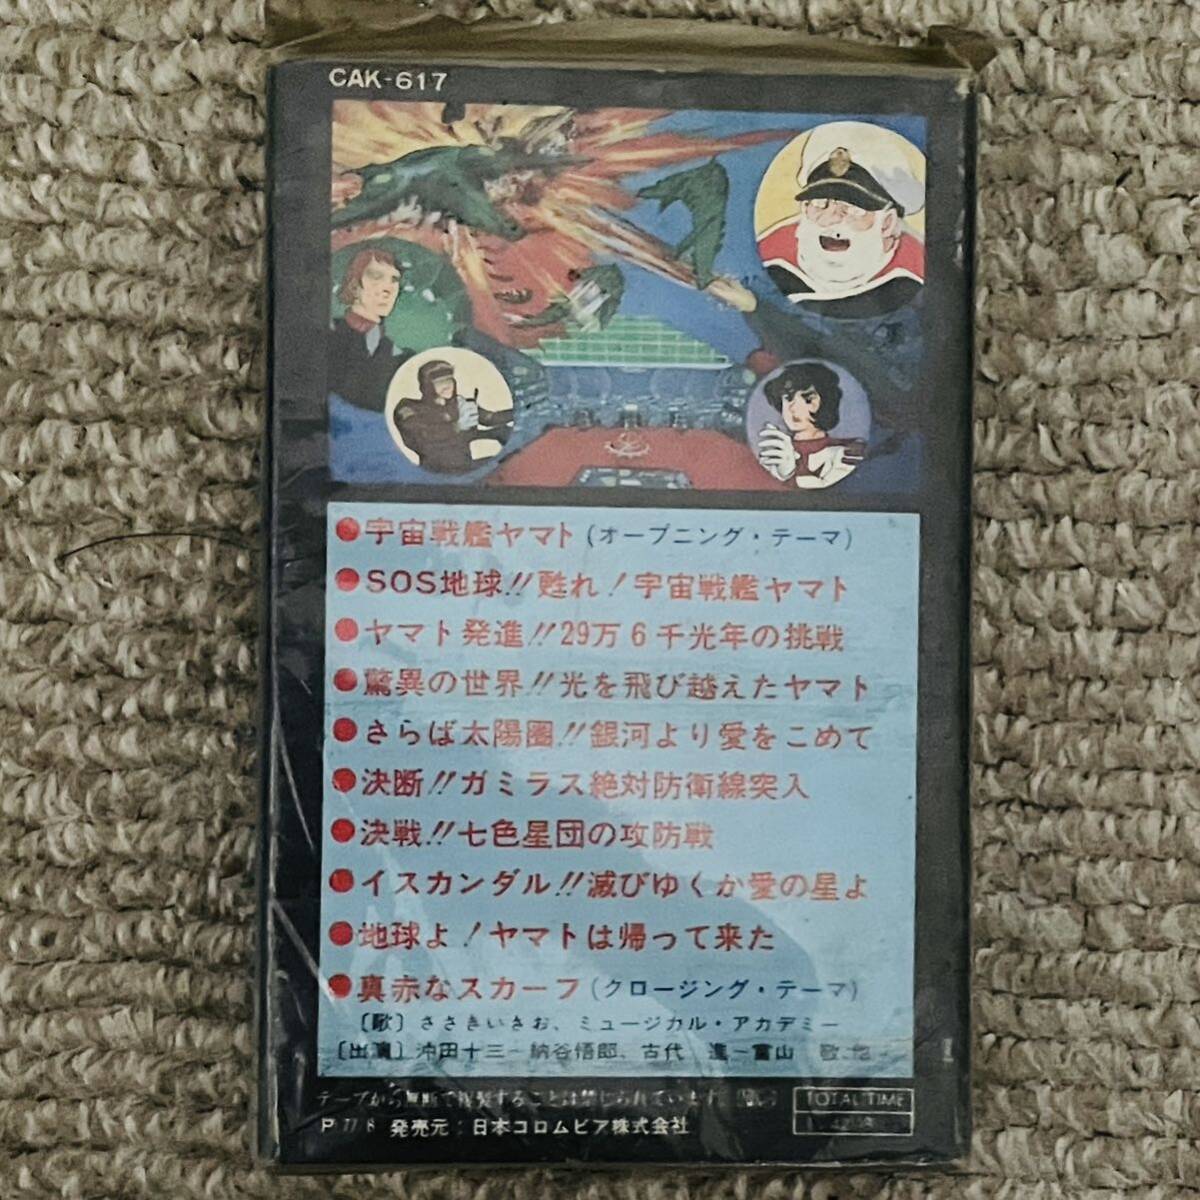 [ rare ] Uchu Senkan Yamato soundtrack tape Uchu Senkan Yamato tv movie domestic record cassette tape CAK-617 lyric card attaching .